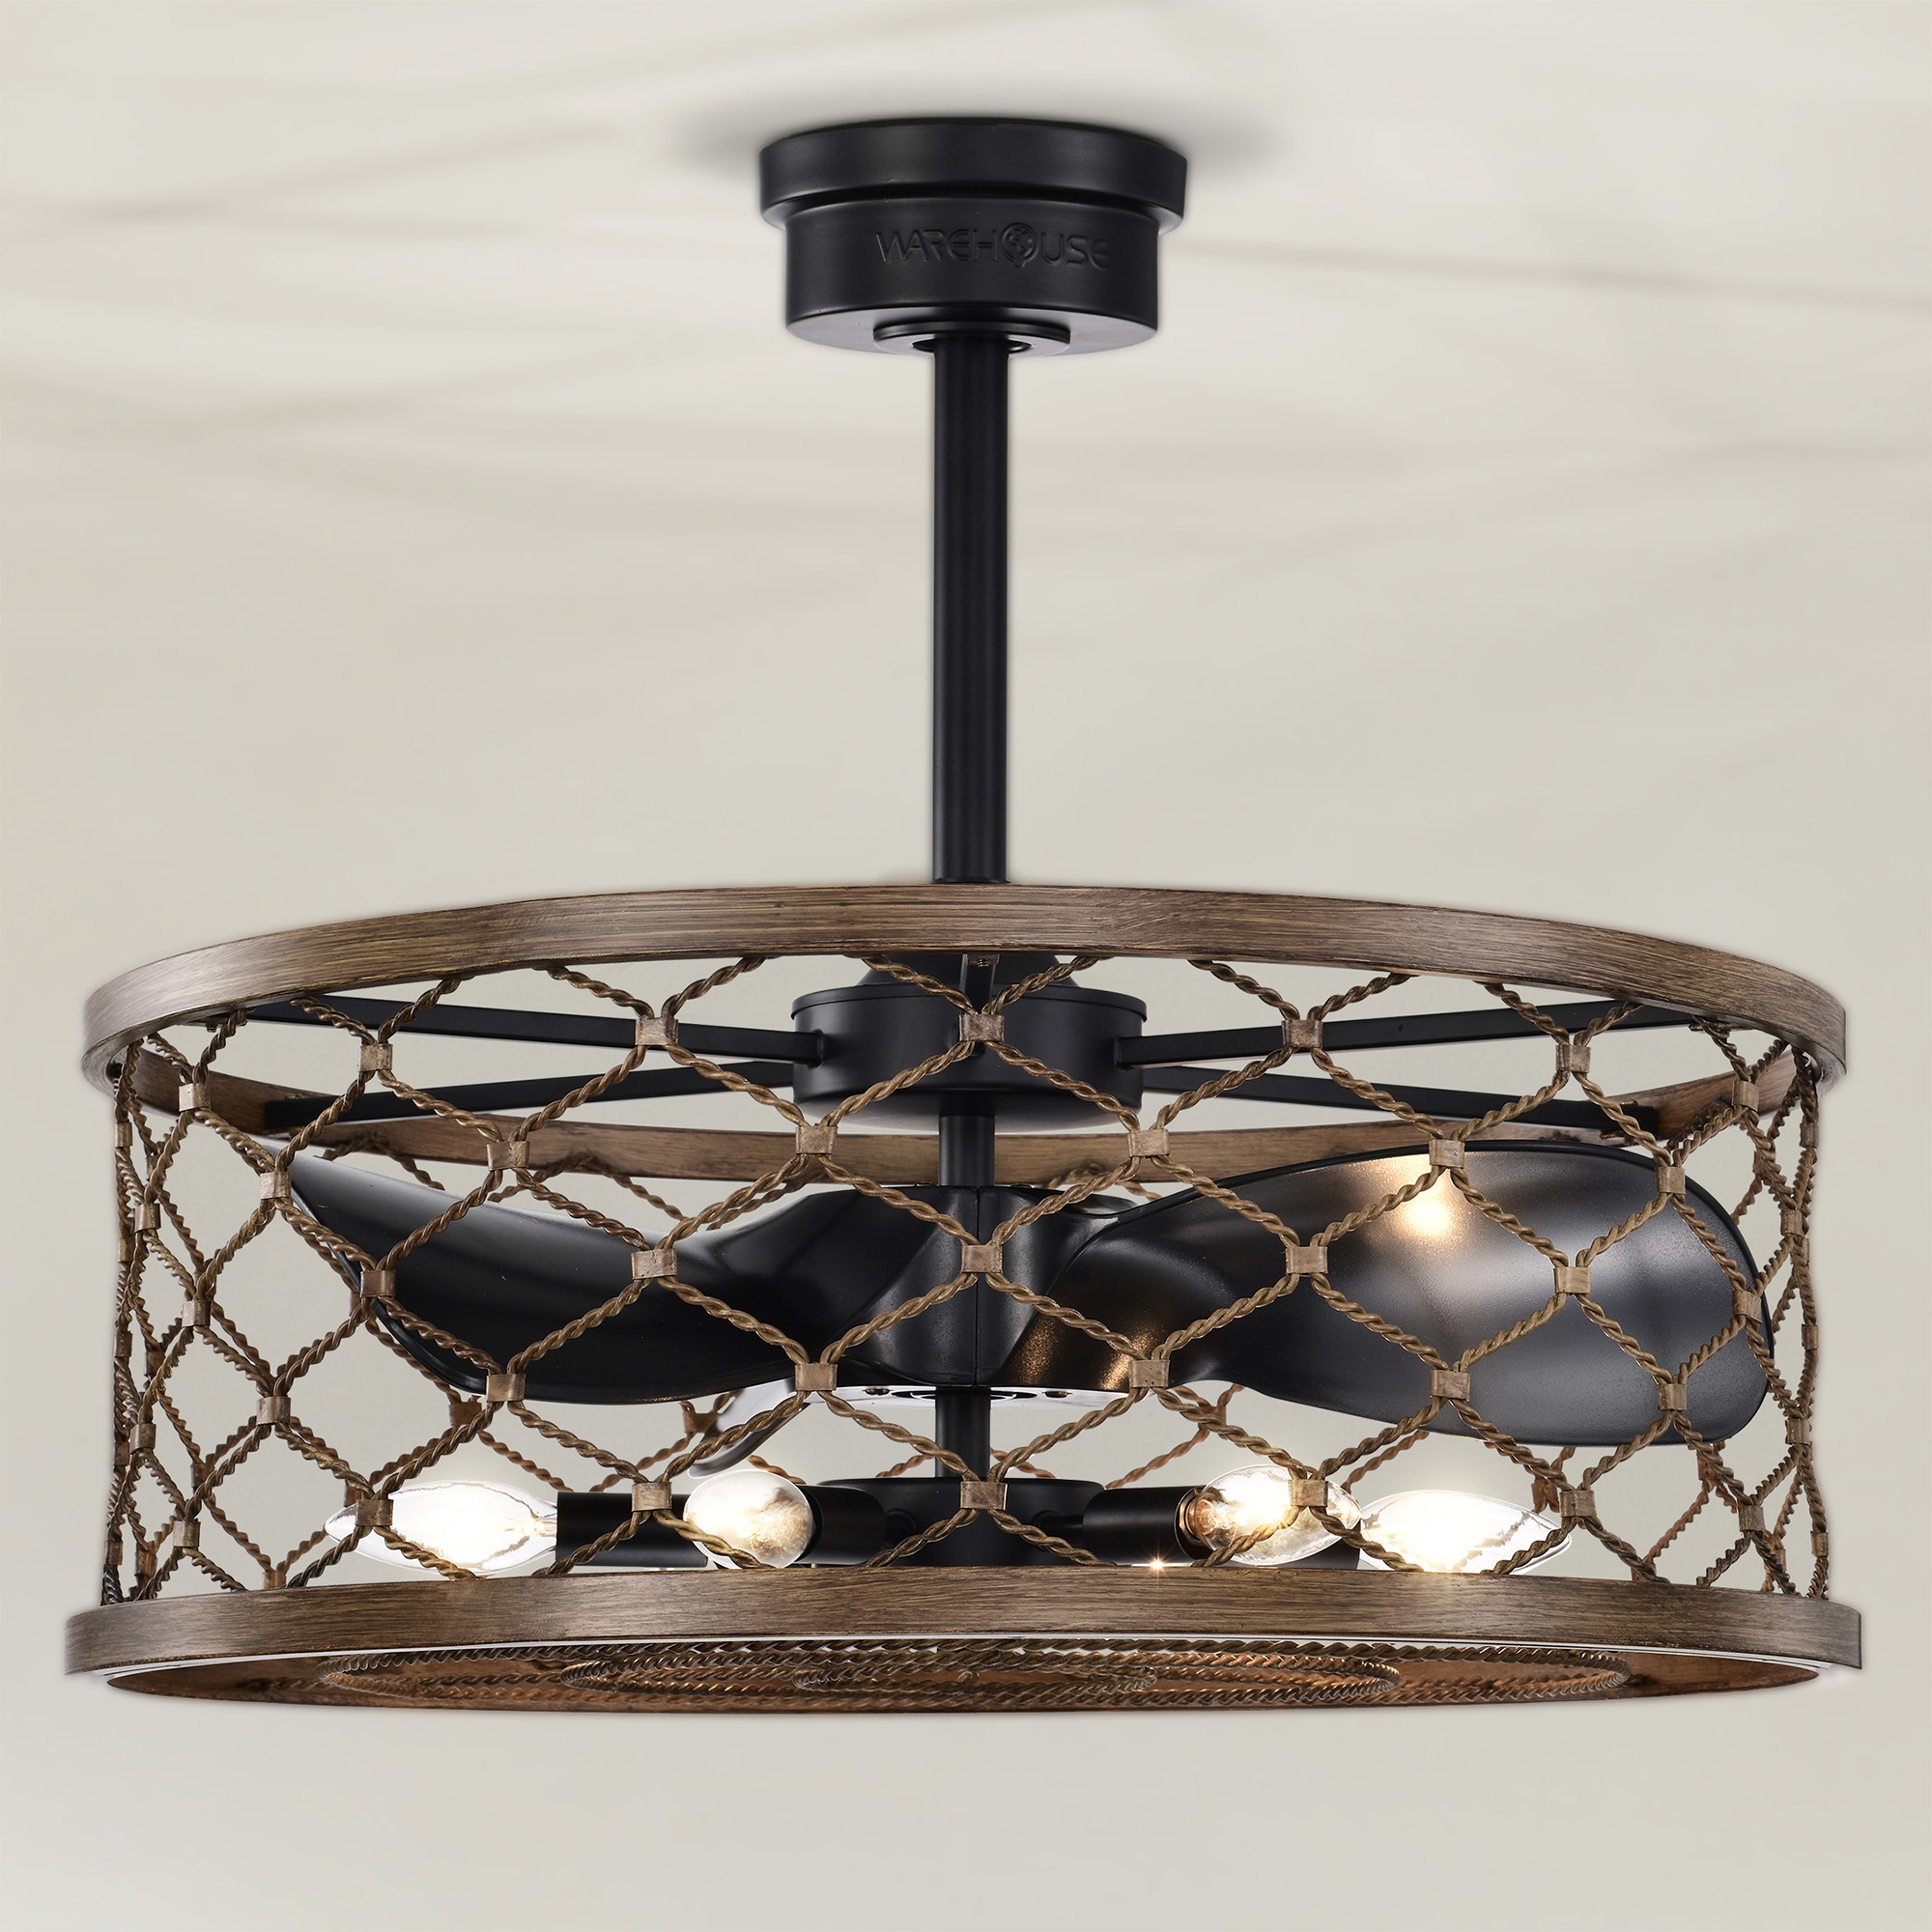 Deniz 24 in. 6-Light Indoor Matte Black and Faux Wood Grain Finish Ceiling Fan with Light Kit